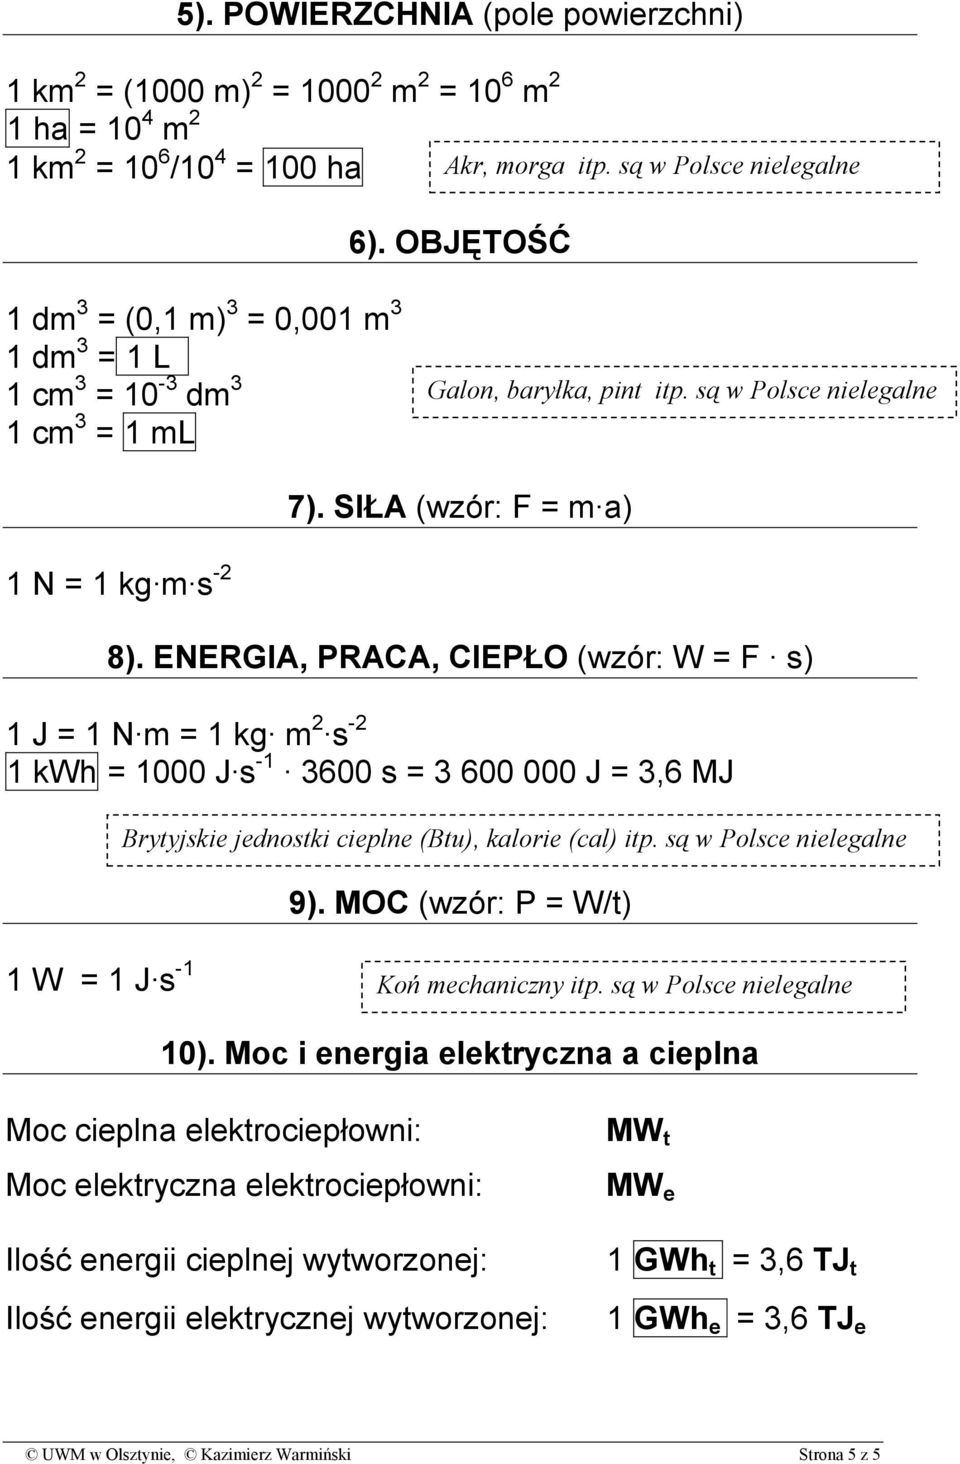 ENERGIA, PRACA, CIEPŁO (wzór: W = F s) -2 1 J = 1 N m = 1 kg m 2 s 1 kwh = 1000 J s -1 3600 s = 3 600 000 J = 3,6 MJ Brytyjskie cieplne (Btu), kalorie (cal) itp. są w Polsce nielegalne 9).